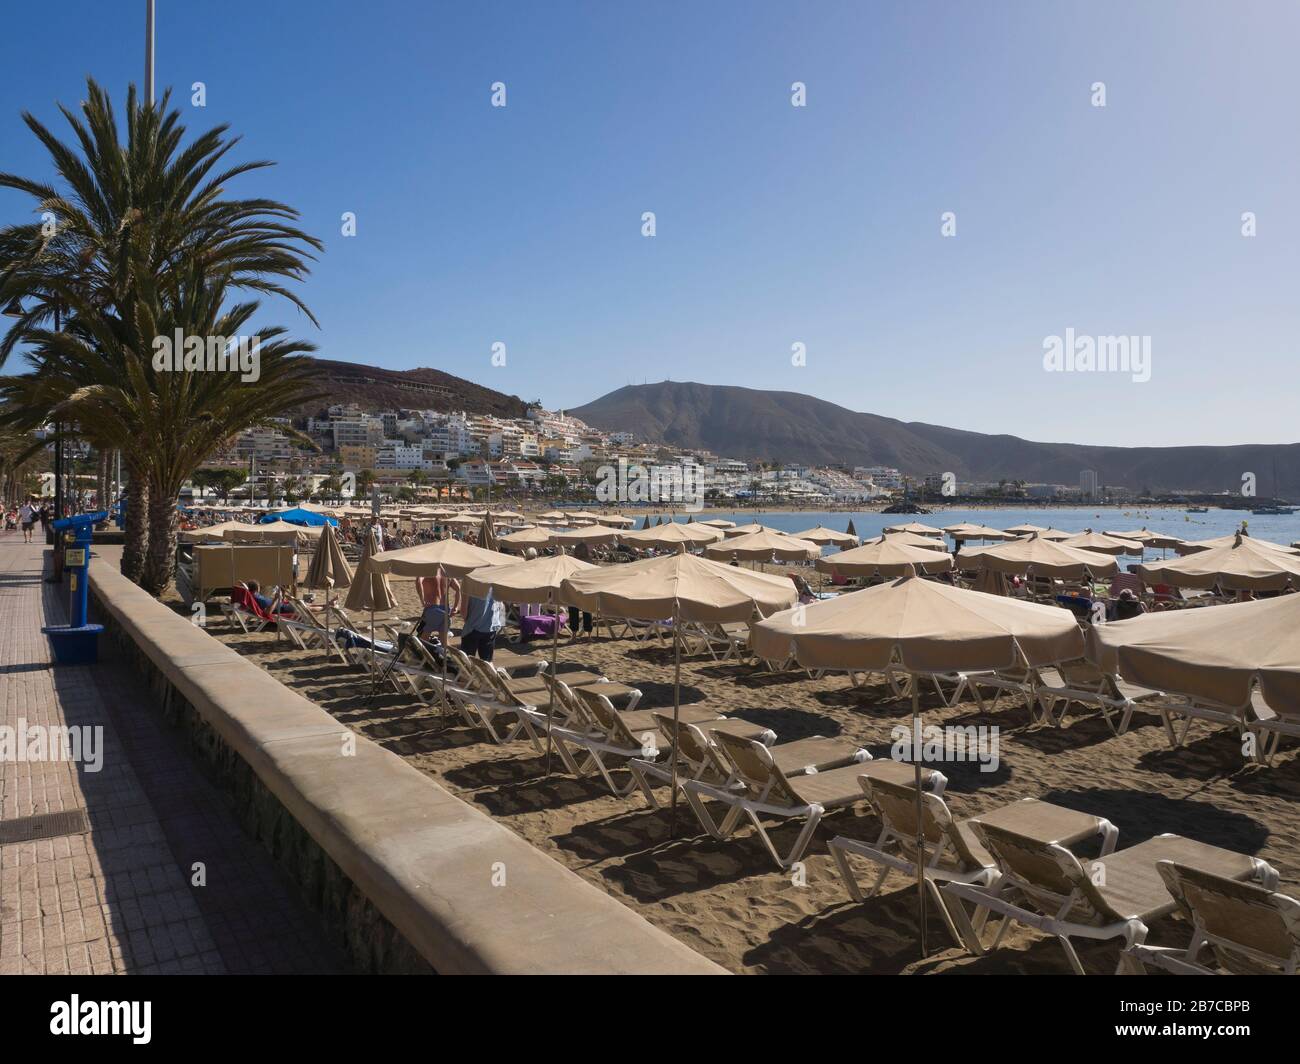 Beachfront promenade at Playa de las Vistas in Los Cristianos, Tenerife, Canary islands Spain, on a warm sunny day Stock Photo